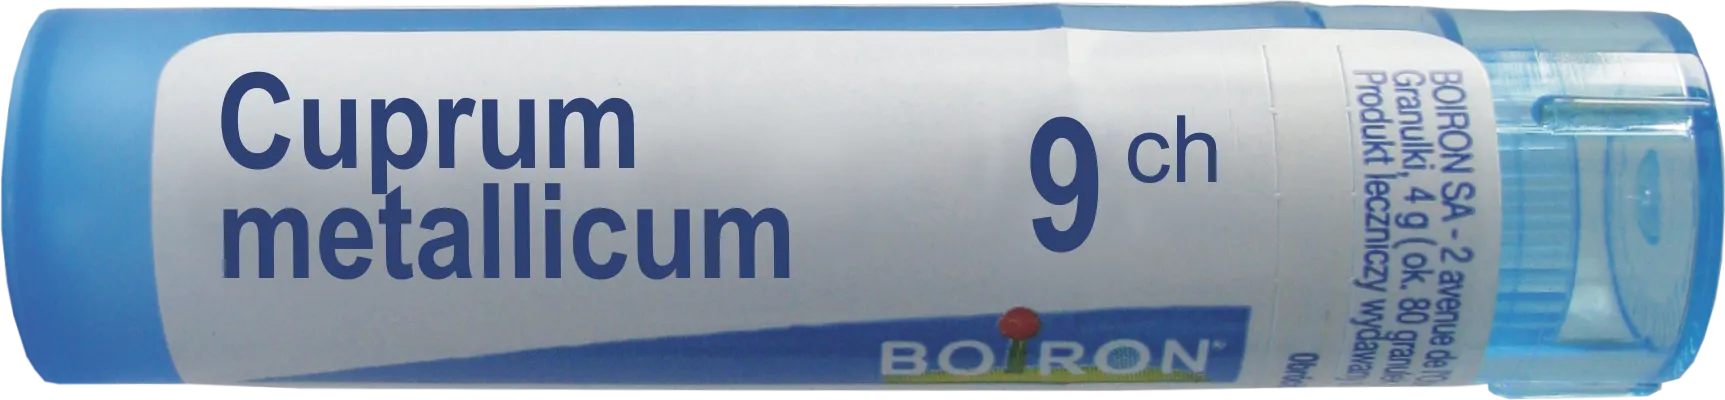 Boiron Cuprum metallicum 9 CH, granulki, 4 g